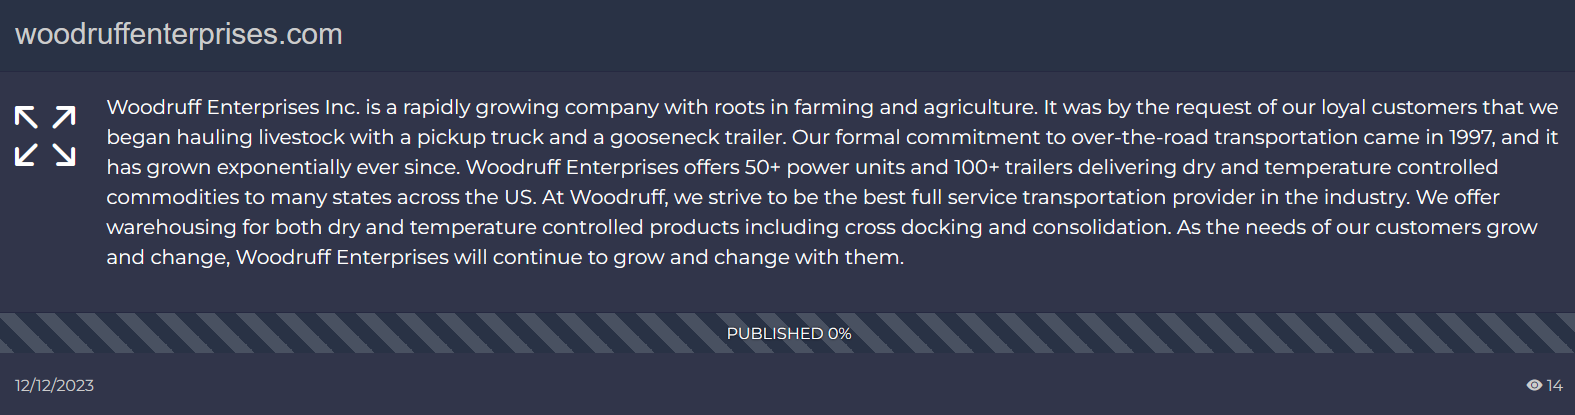 Woodruff Enterprises